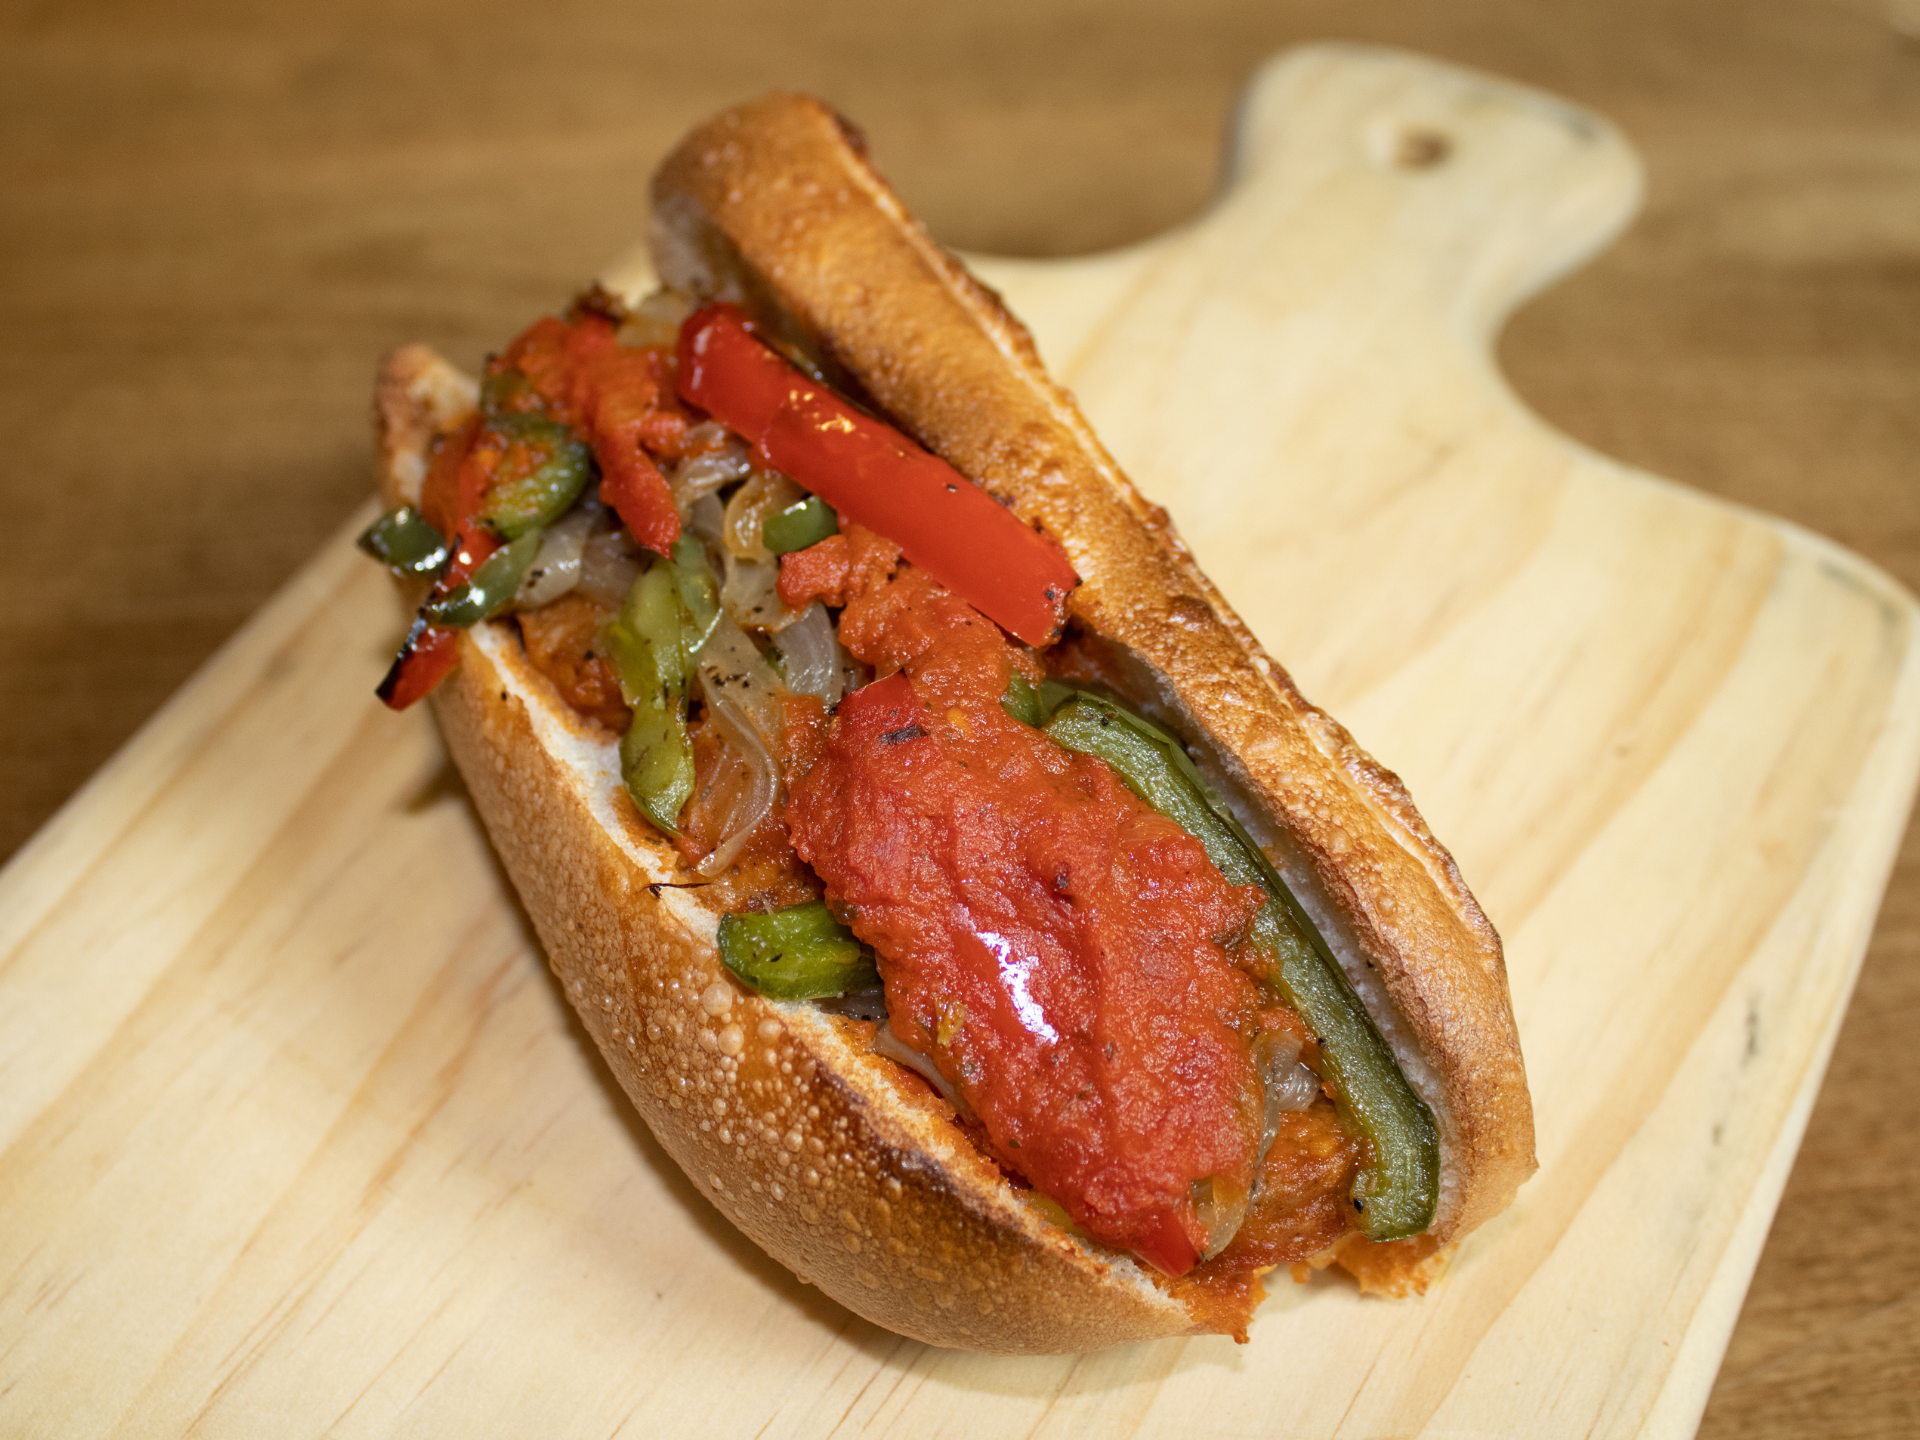 Vegan Sausage sandwich